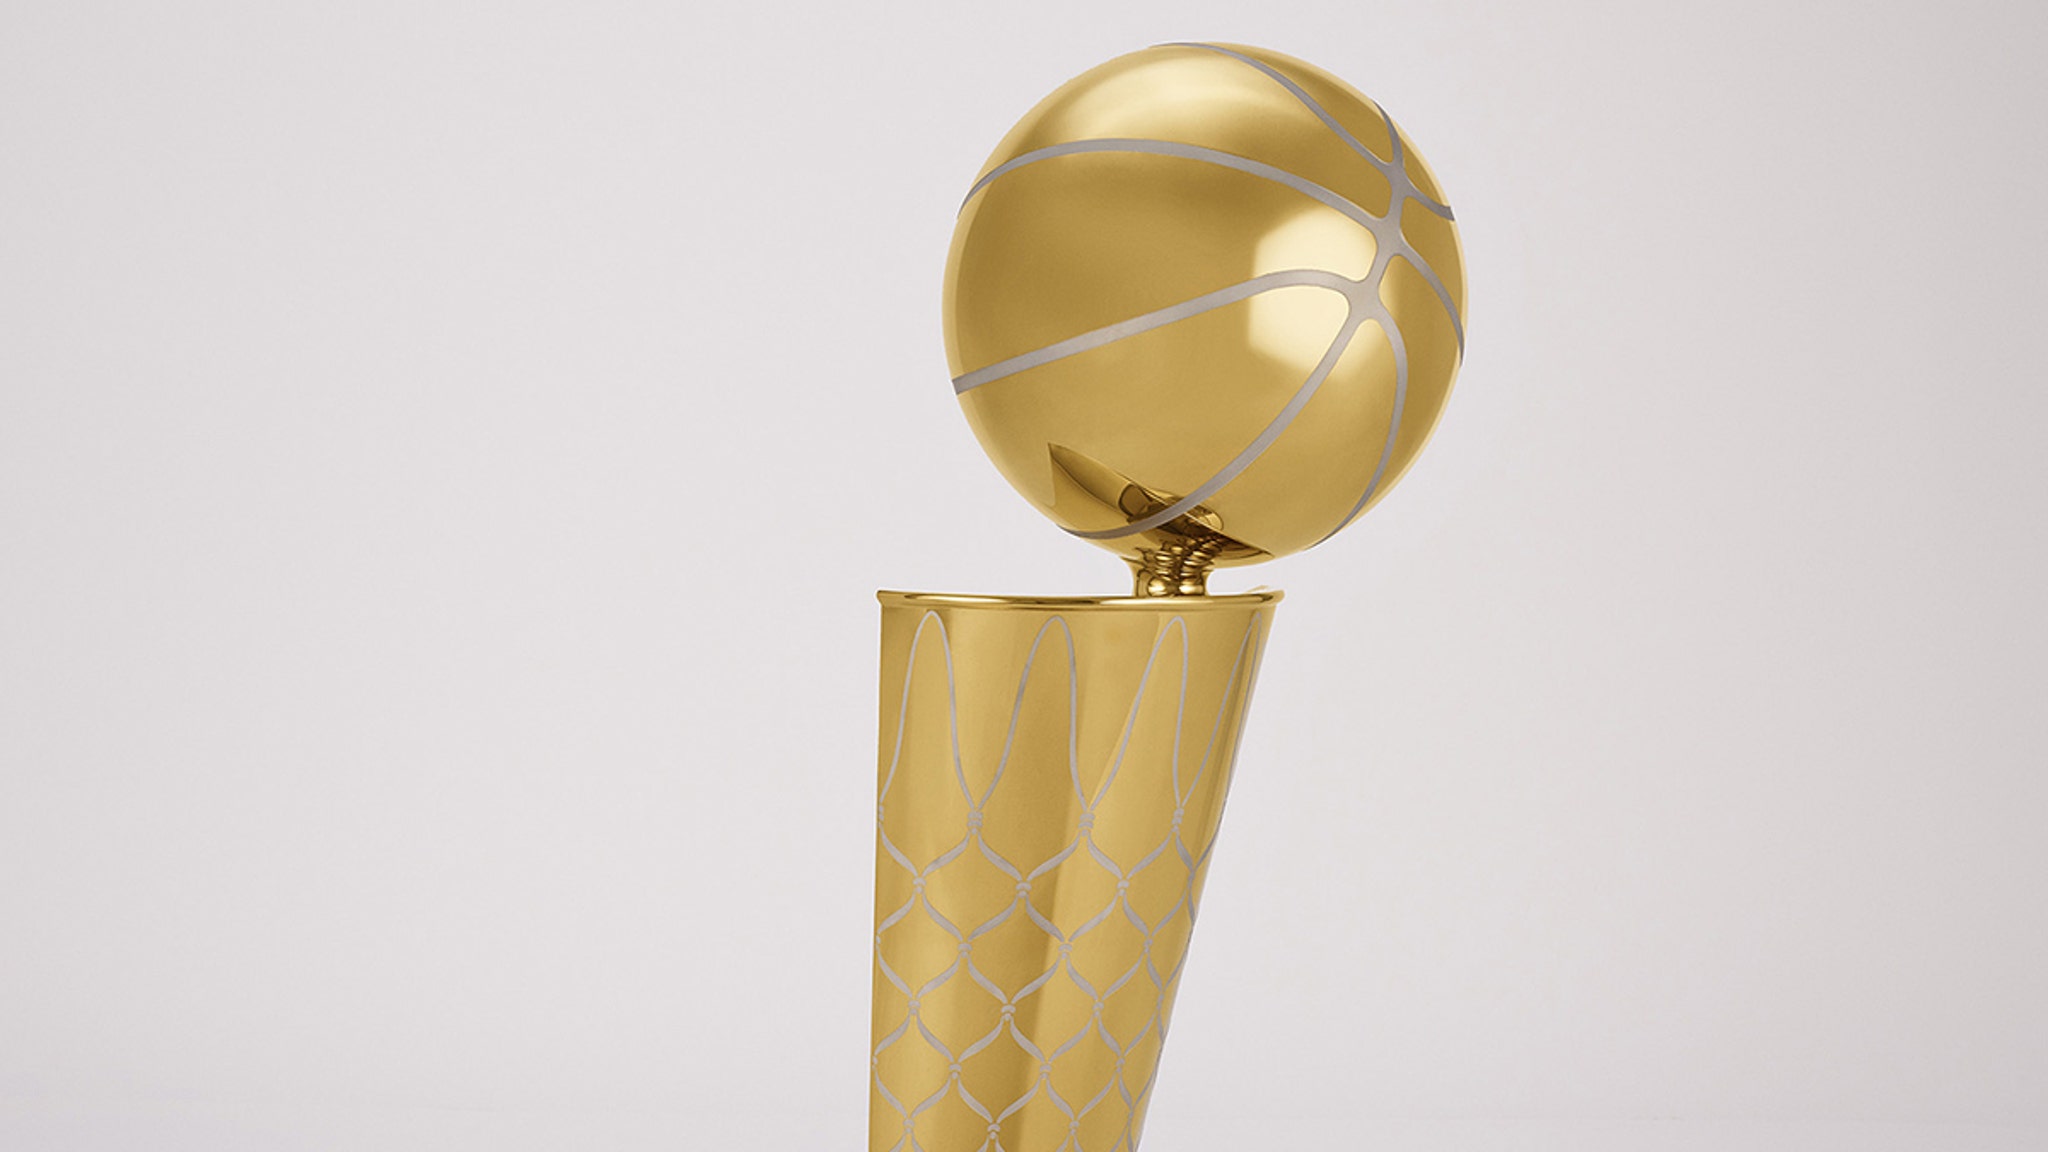 how to get trophy case Larry Bird on an NBA 2 k 23｜TikTok Search